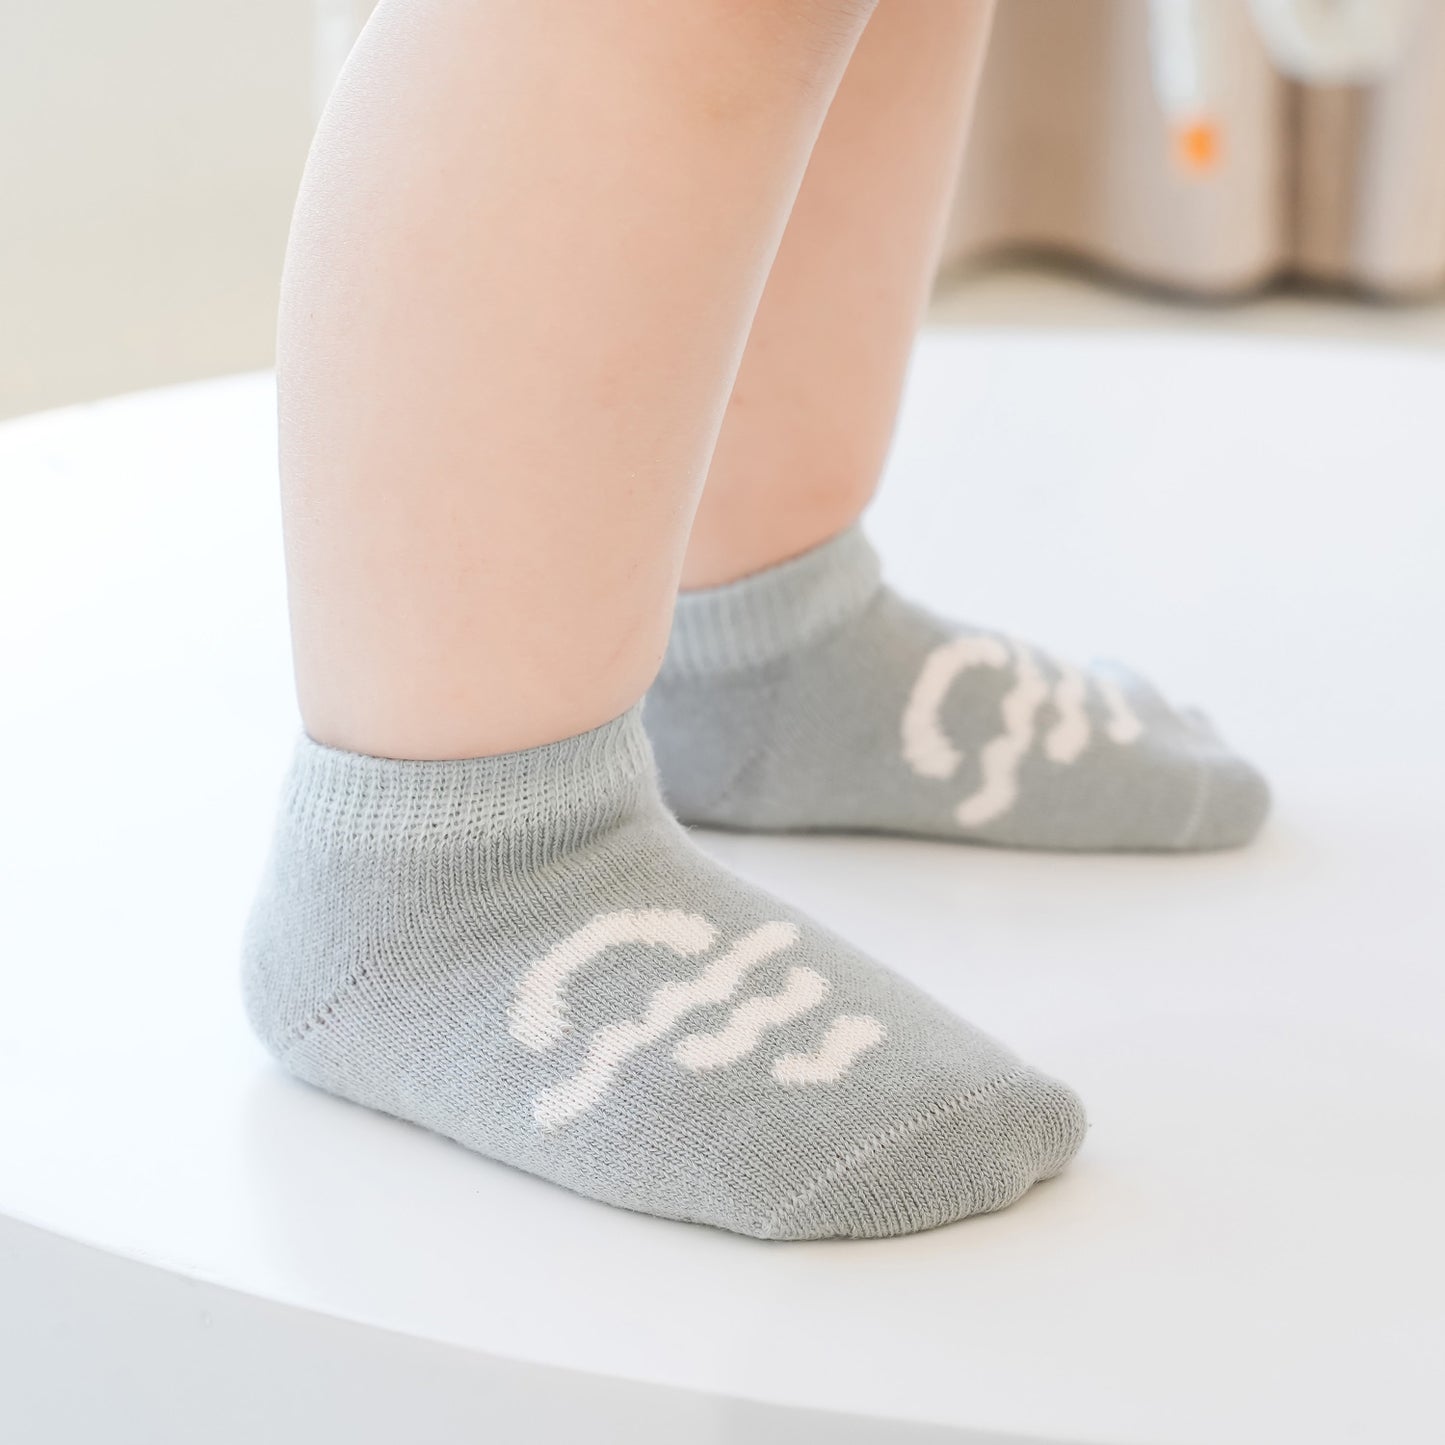 I Love U - 5 pairs of Stay-On Baby & Toddler Non-Slip Socks